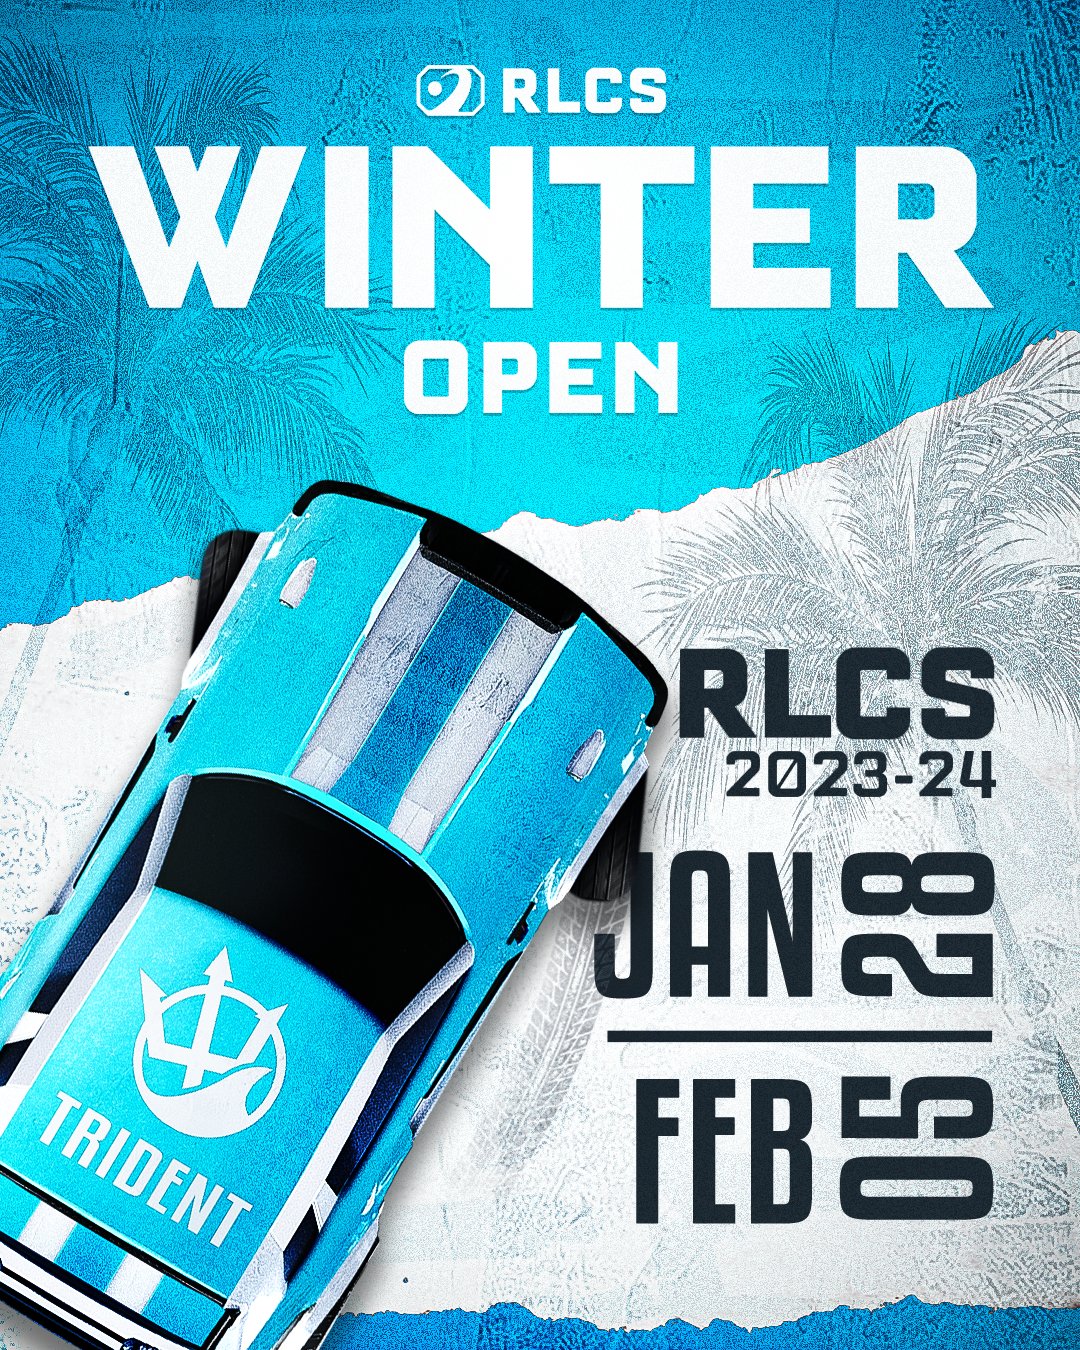 RLS Winter Open Begins!